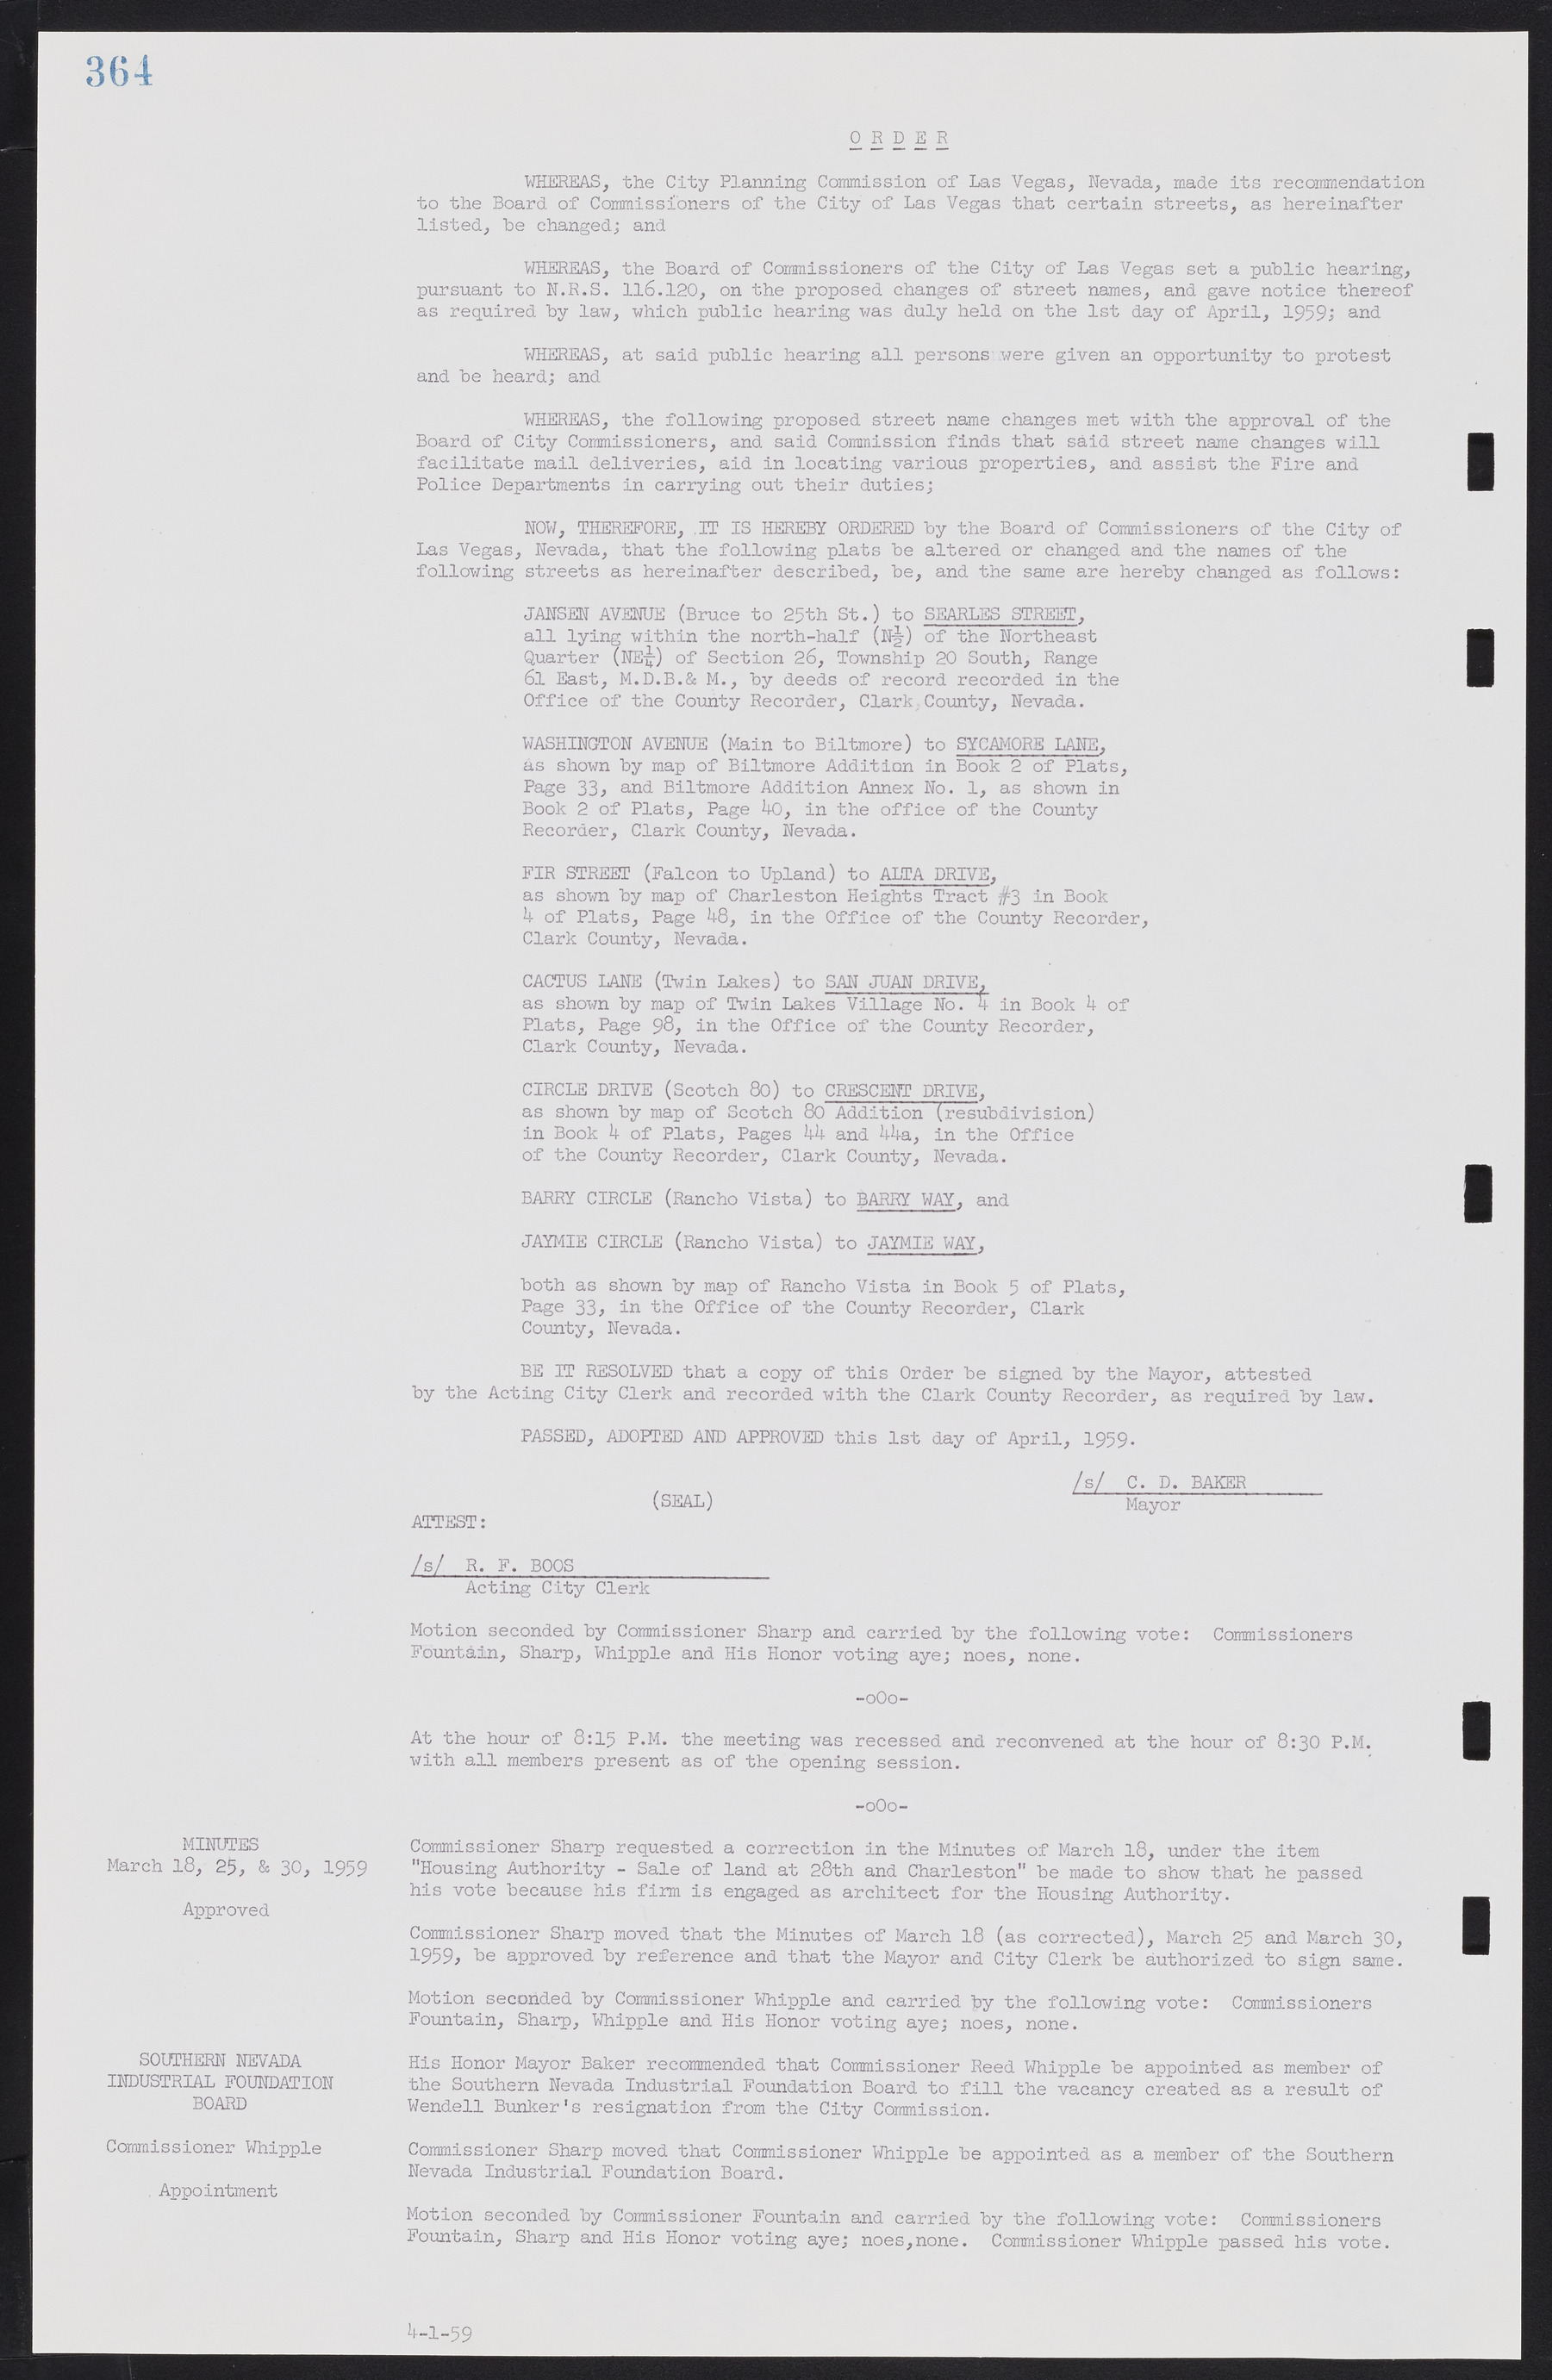 Las Vegas City Commission Minutes, November 20, 1957 to December 2, 1959, lvc000011-400